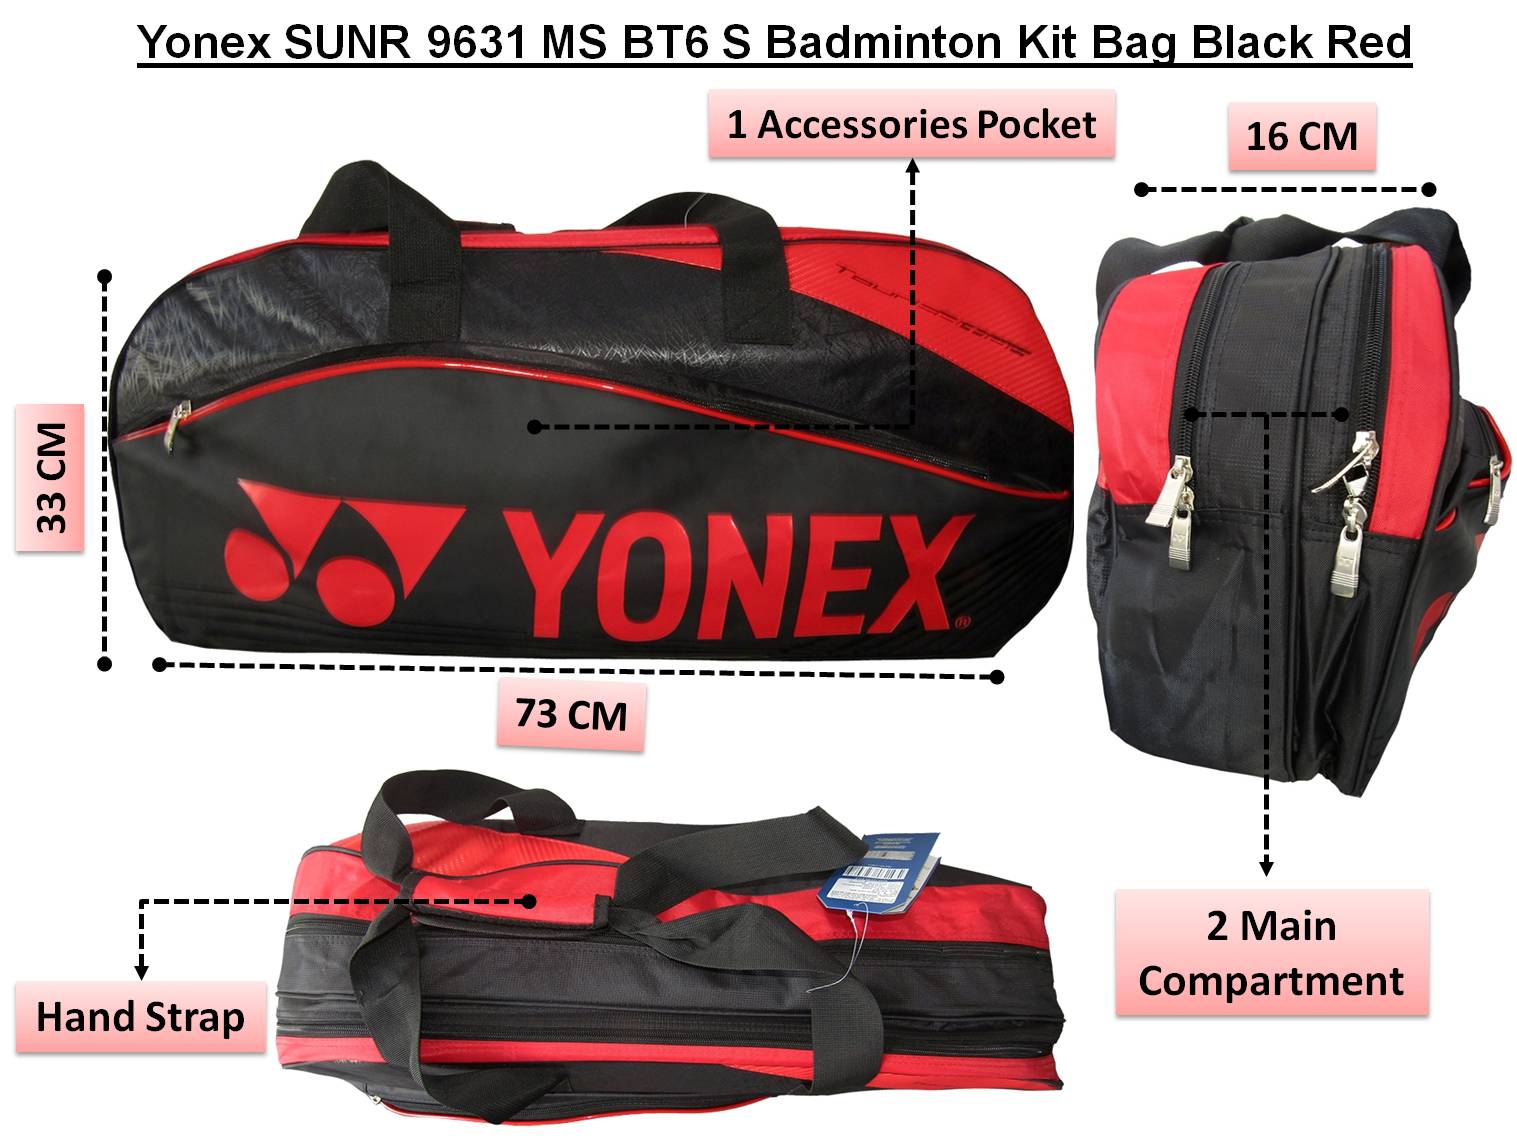 Yonex_SUNR_9631_MS_BT6_S_Badminton_Kit_Bag_Black_Red